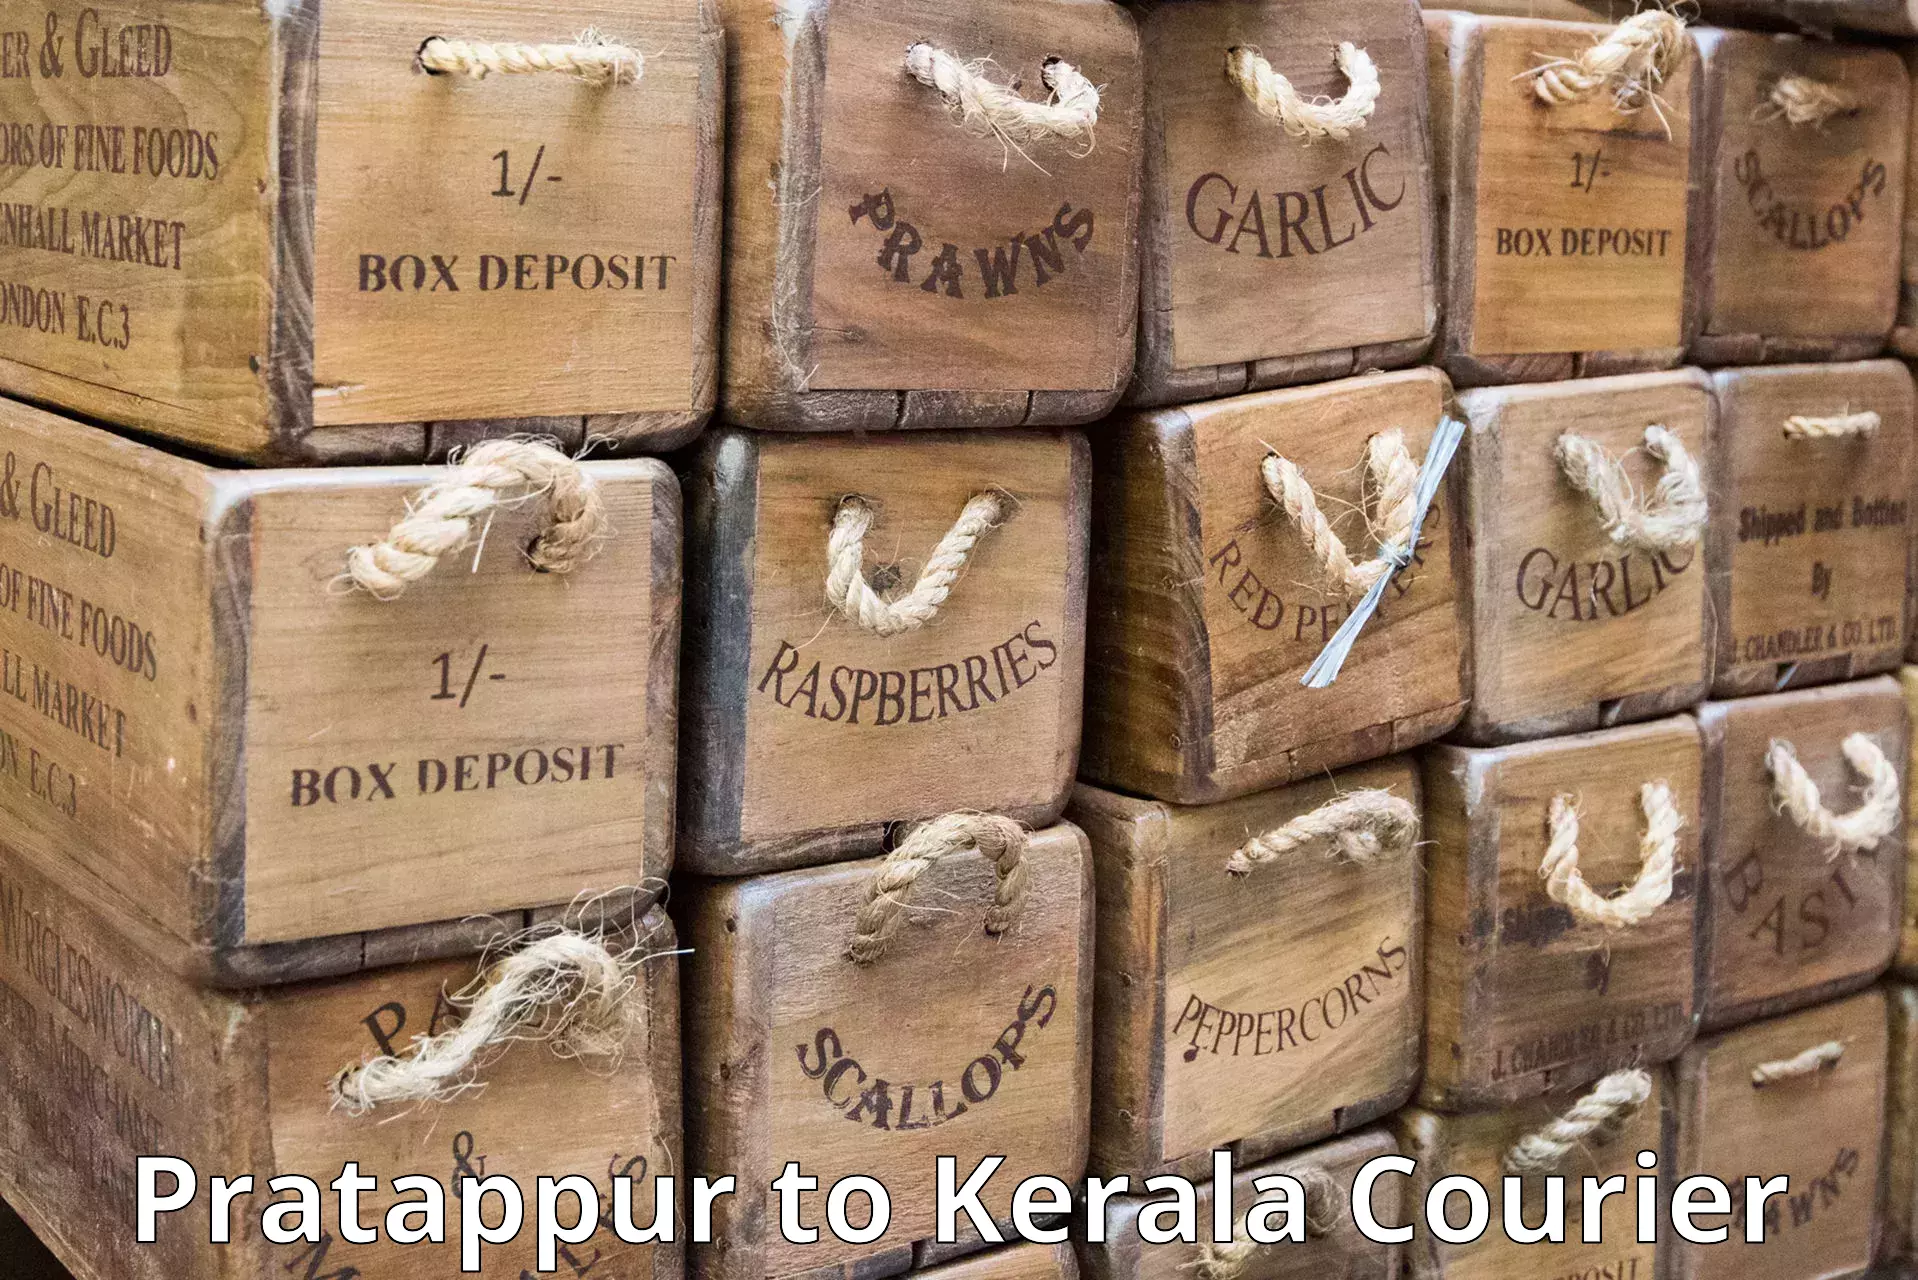 International courier networks Pratappur to Kerala